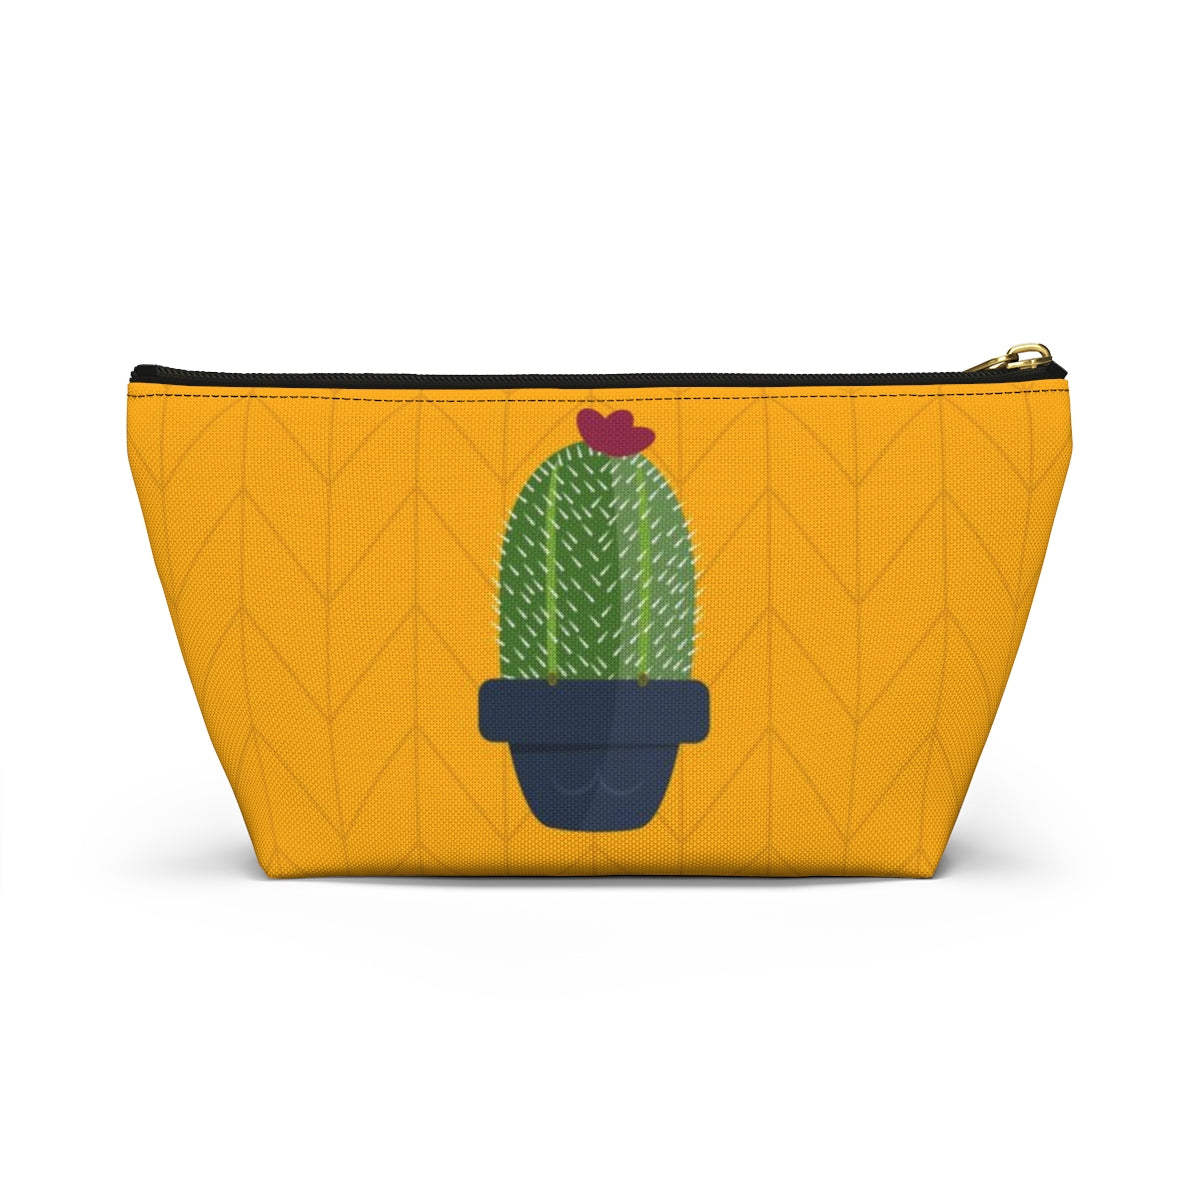 Big Bottom Zipper Pouch - Plant Nerd Cactus